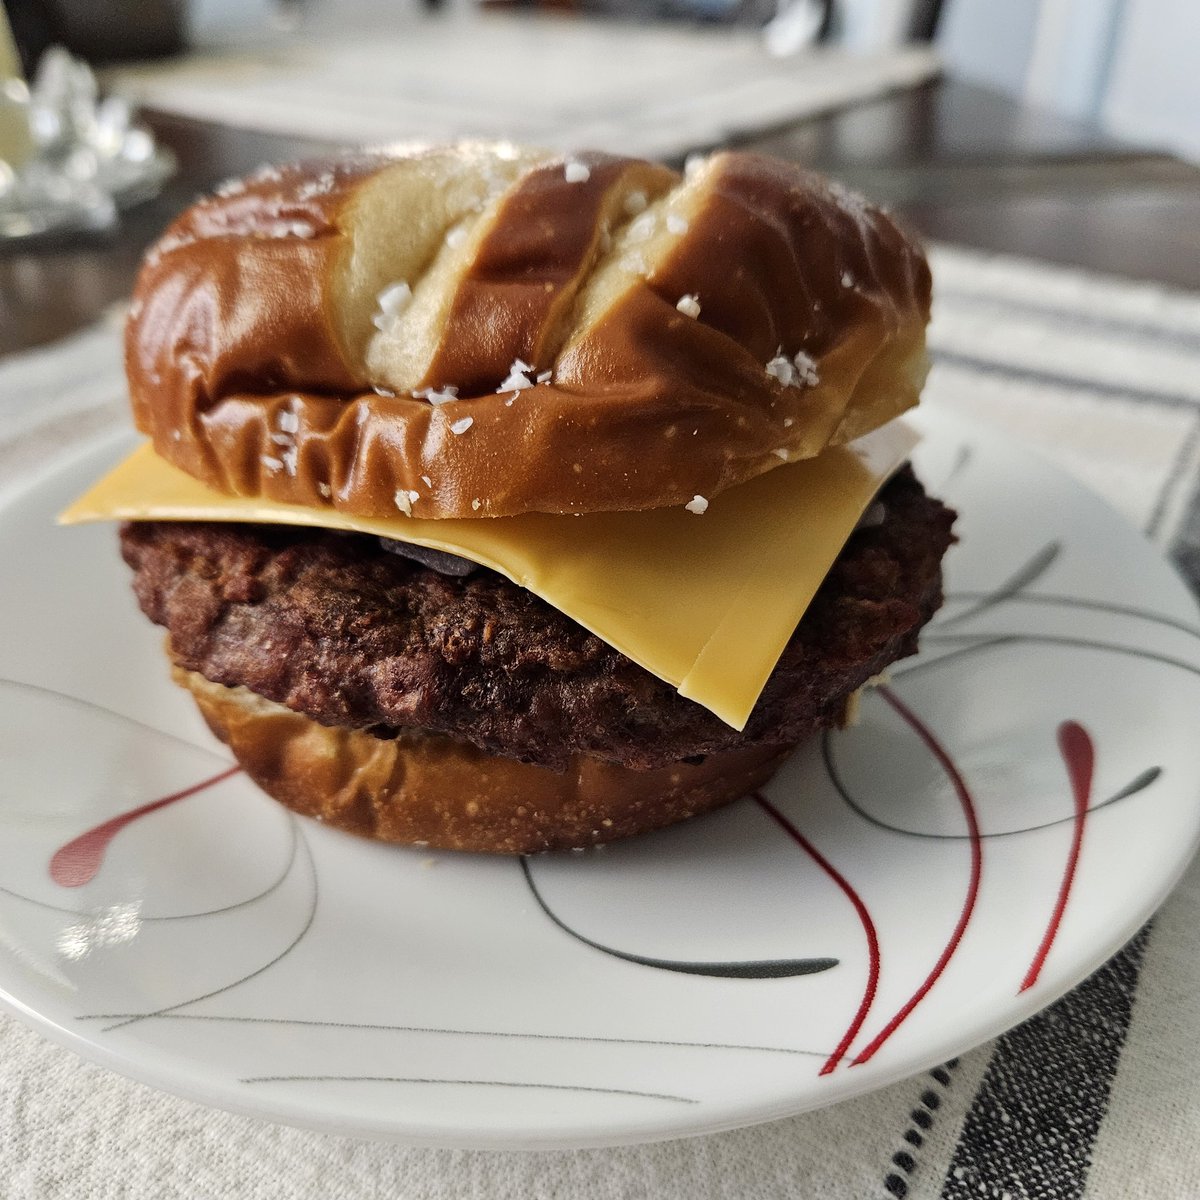 Lunch. 1/3rd lb. Sirloin Burger on King Hawaiian pretzel bun with cheese and onion. 38g protein.